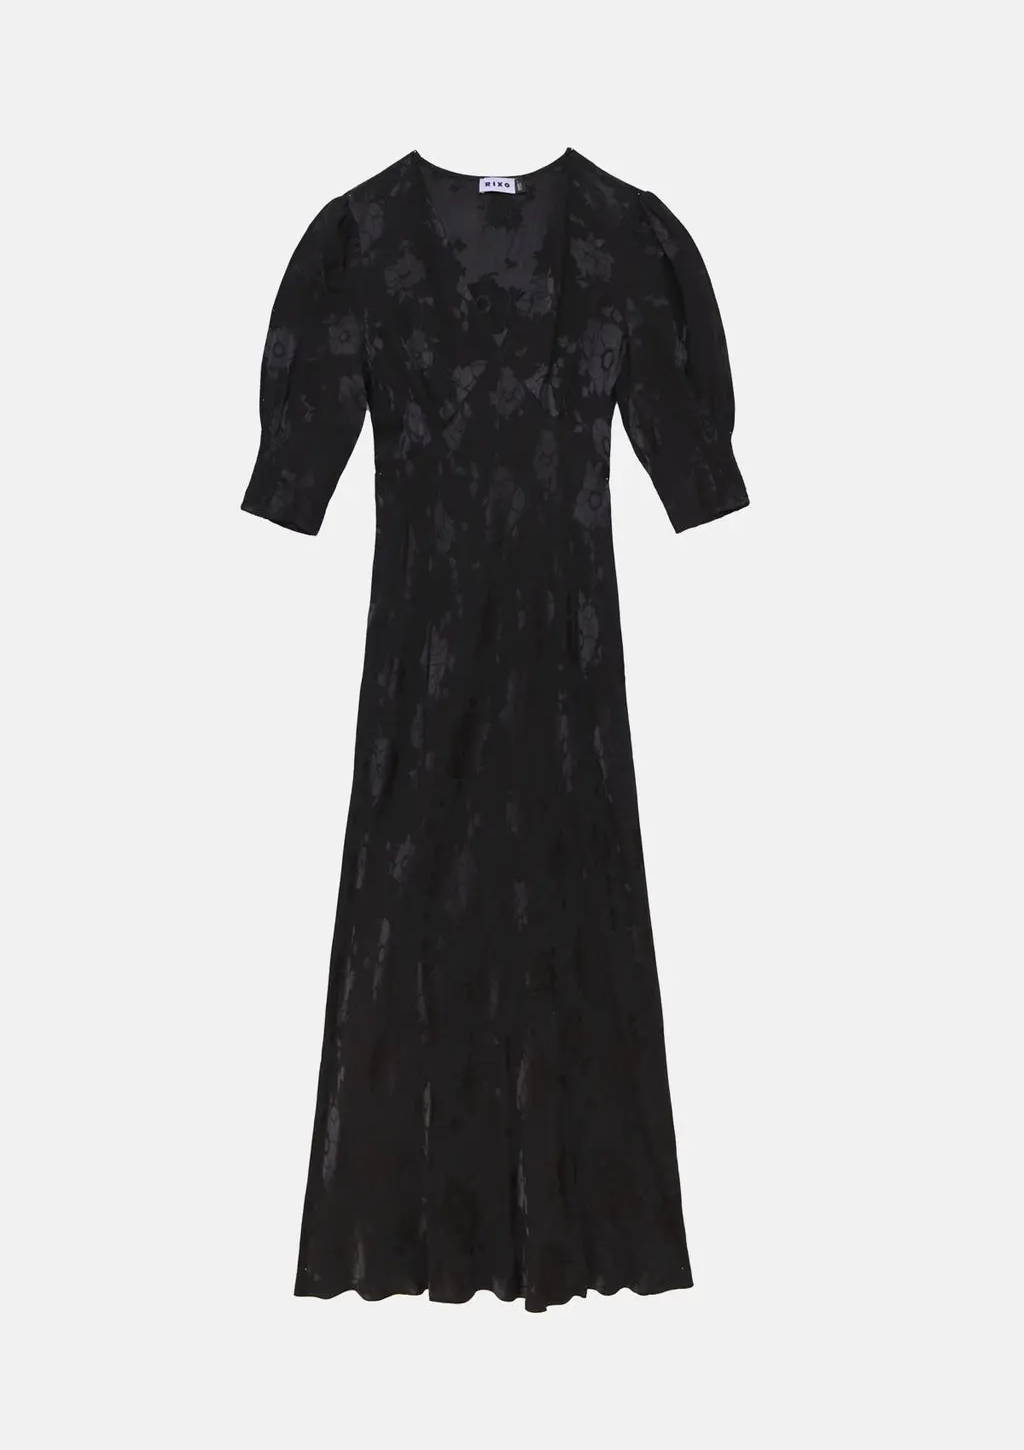 Rixo Zadie Dress in Black Poppy Jackquard.